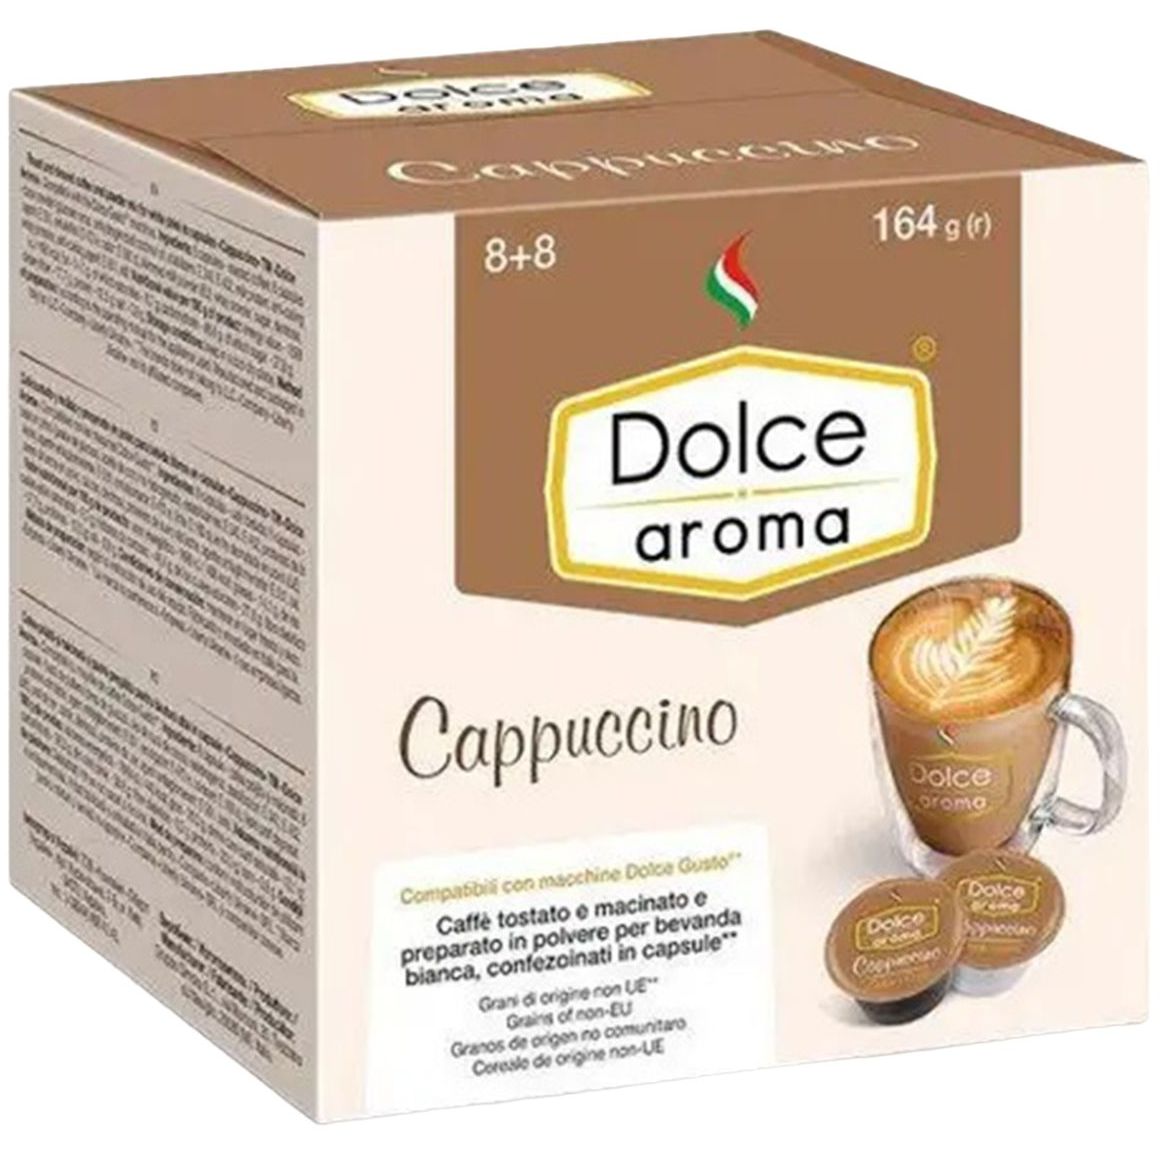 Кава в капсулах Dolce Aroma Cappuccino Dolce Gusto 16 капсул 164 г (881652) - фото 1